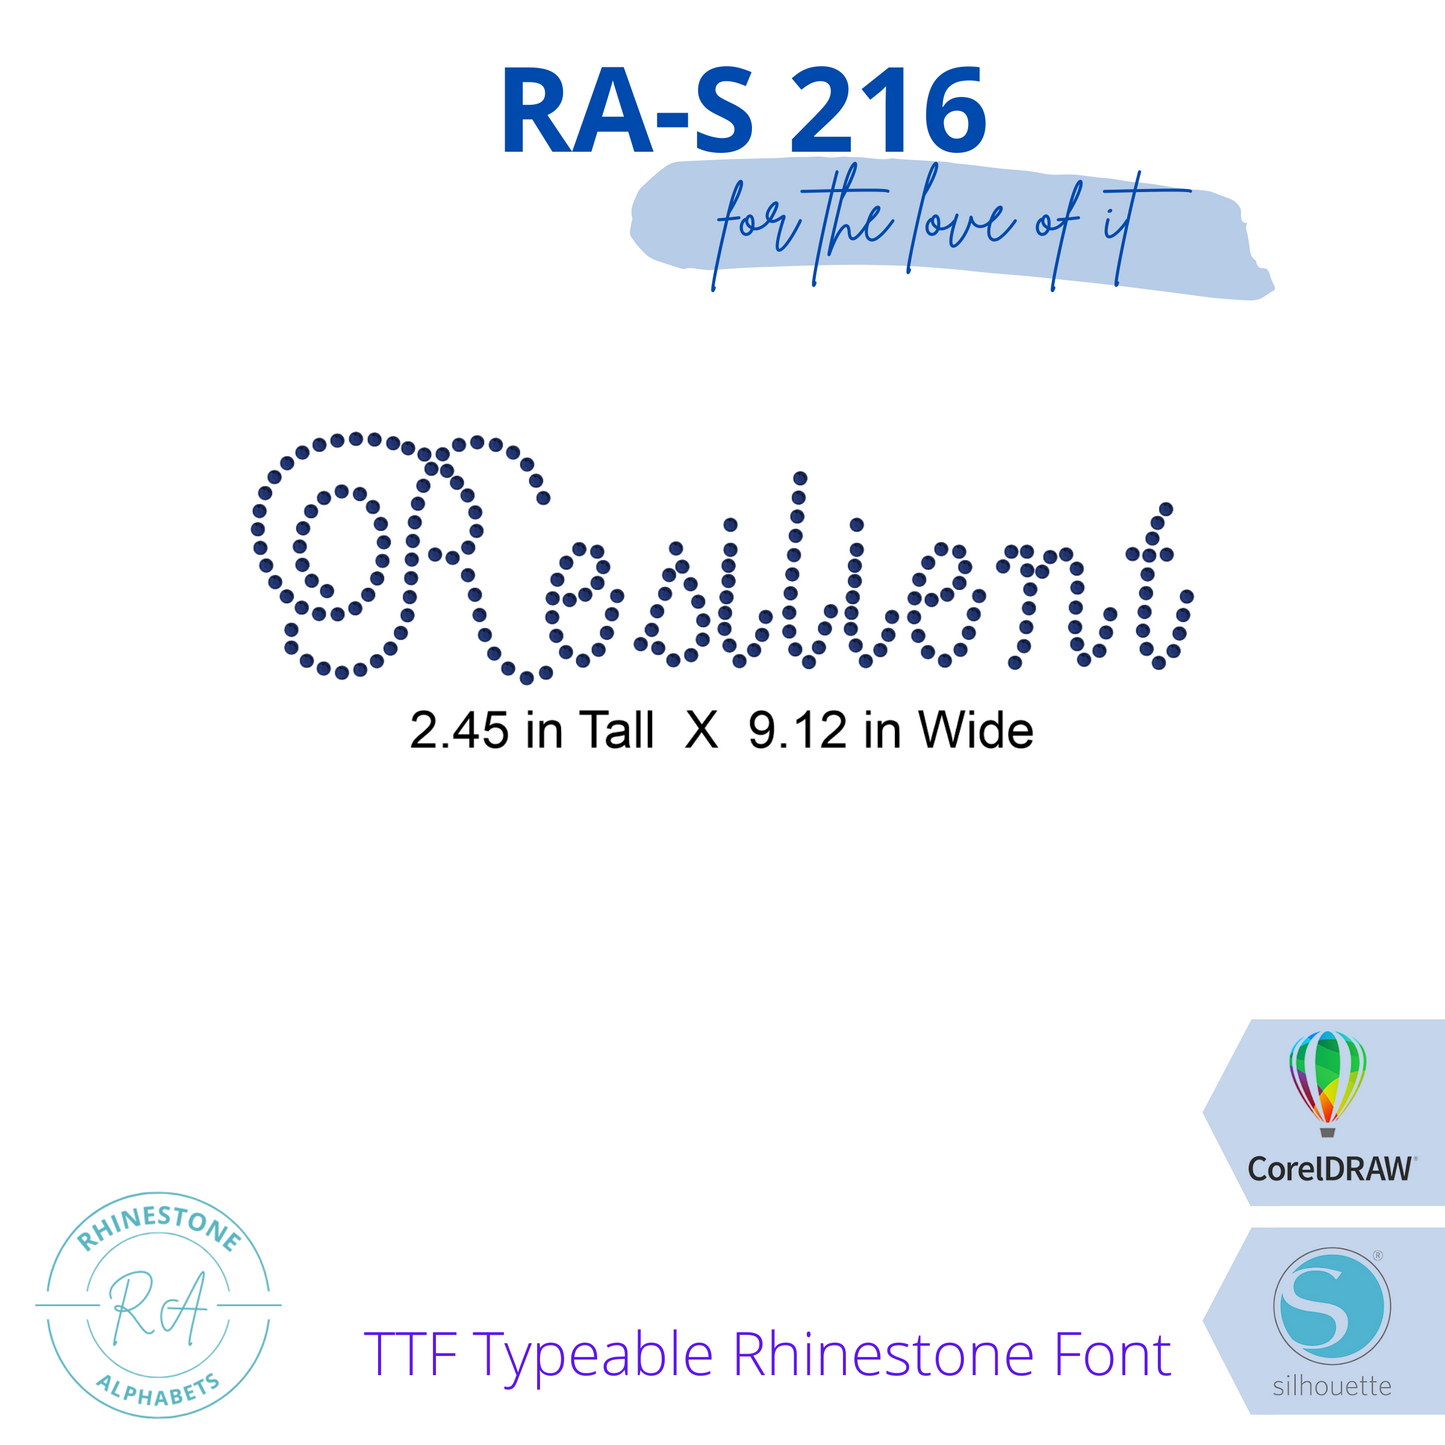 RA-S 216 - RhinestoneAlphabets